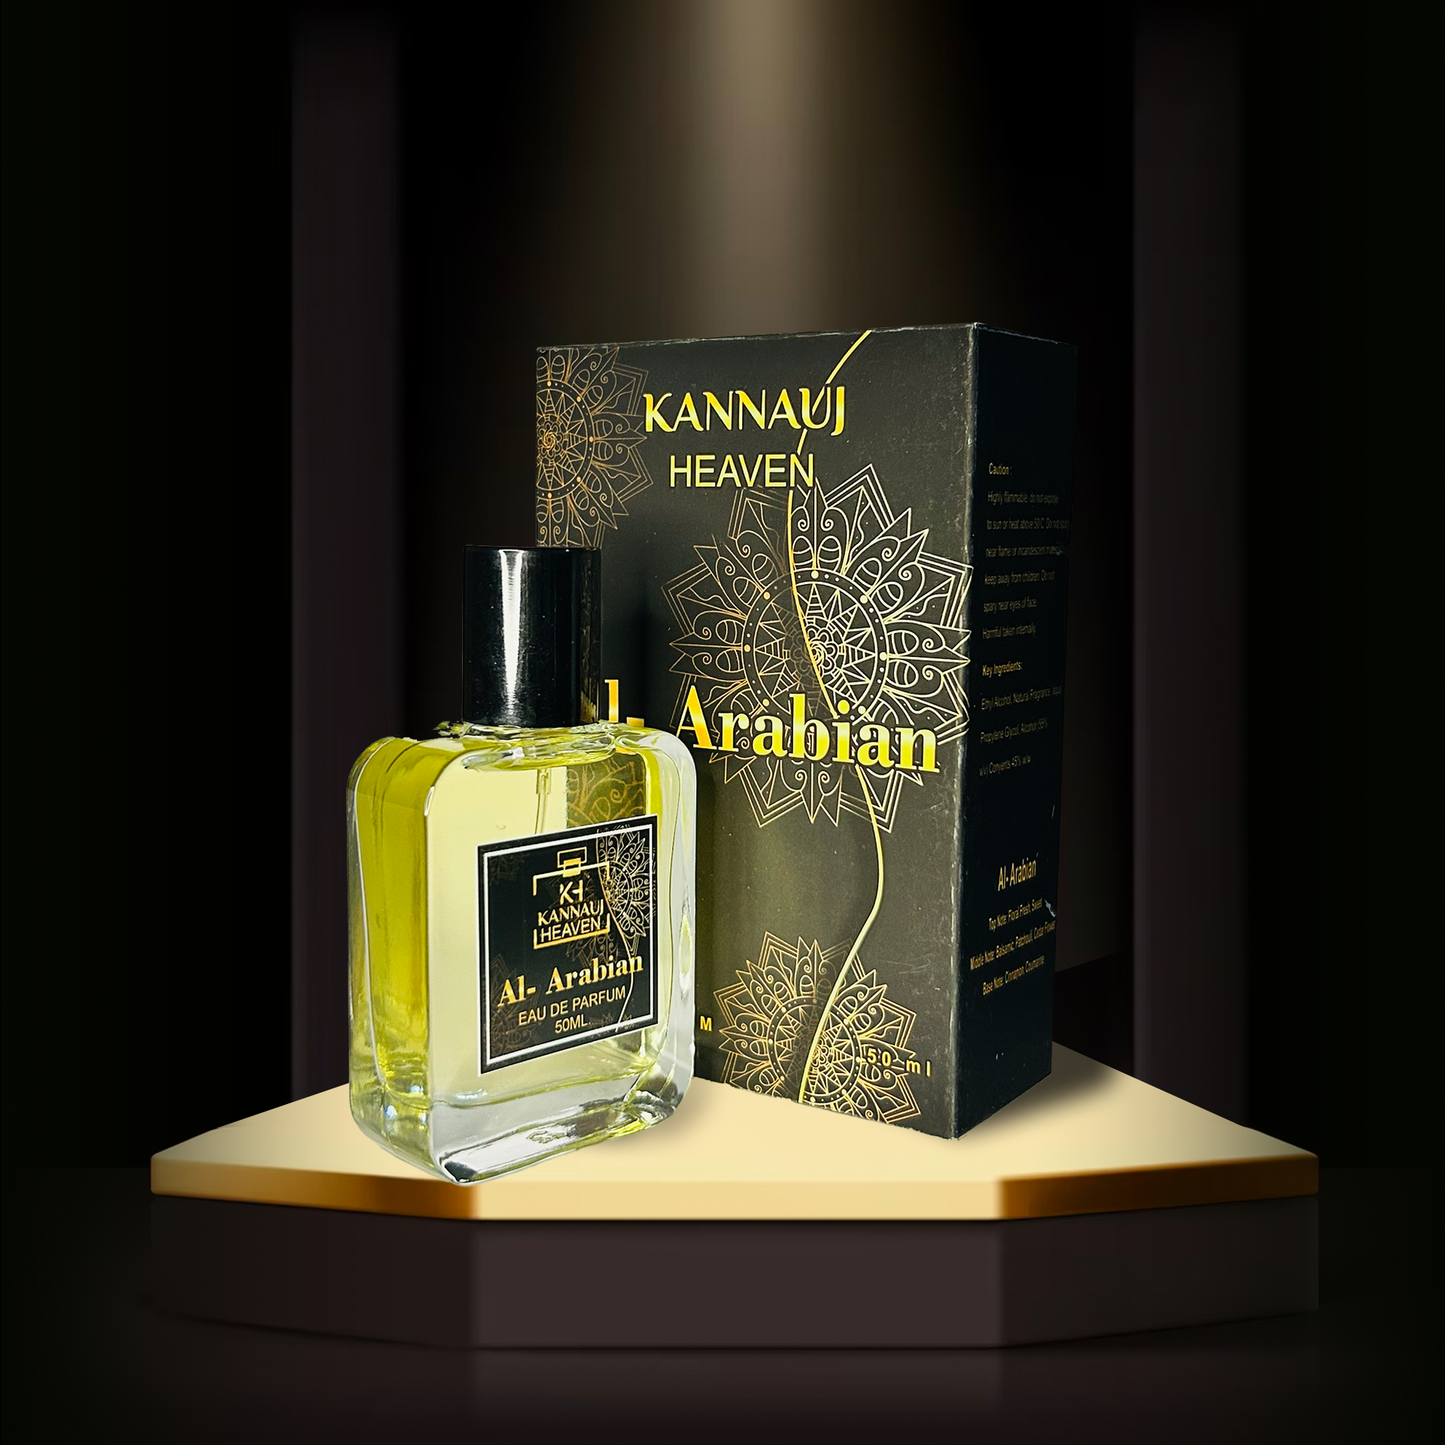 Al - Arabian Premium Perfume